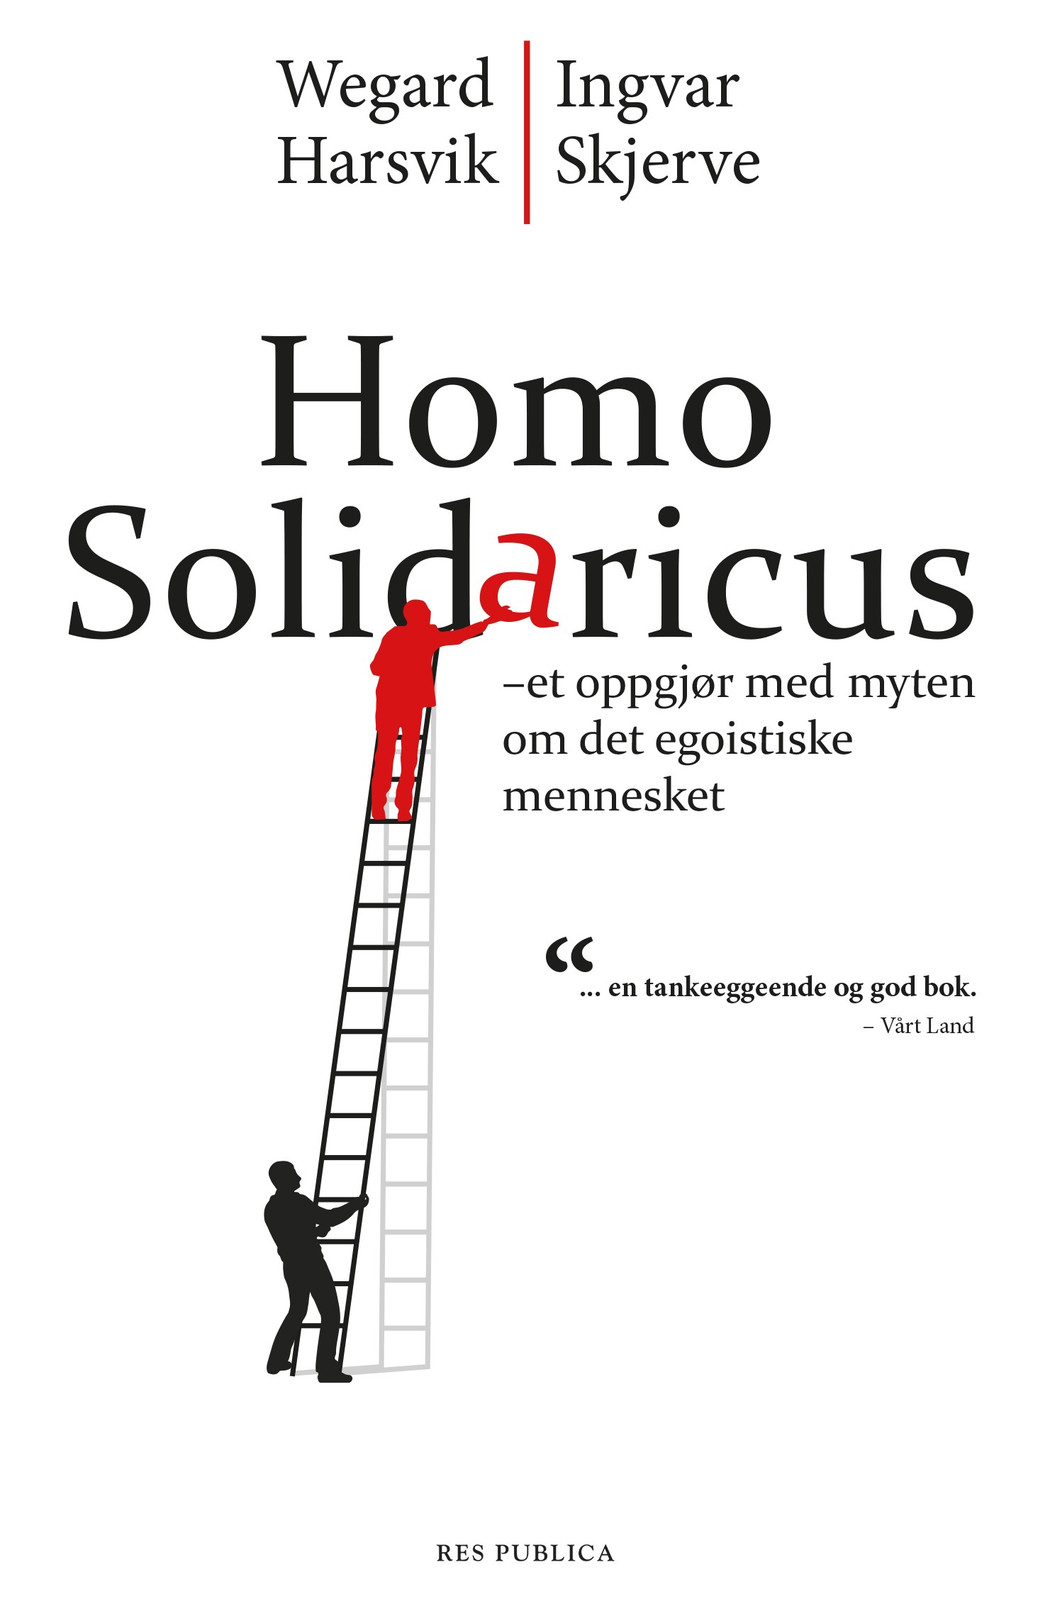 Harsvik skjeve homo solidaricus